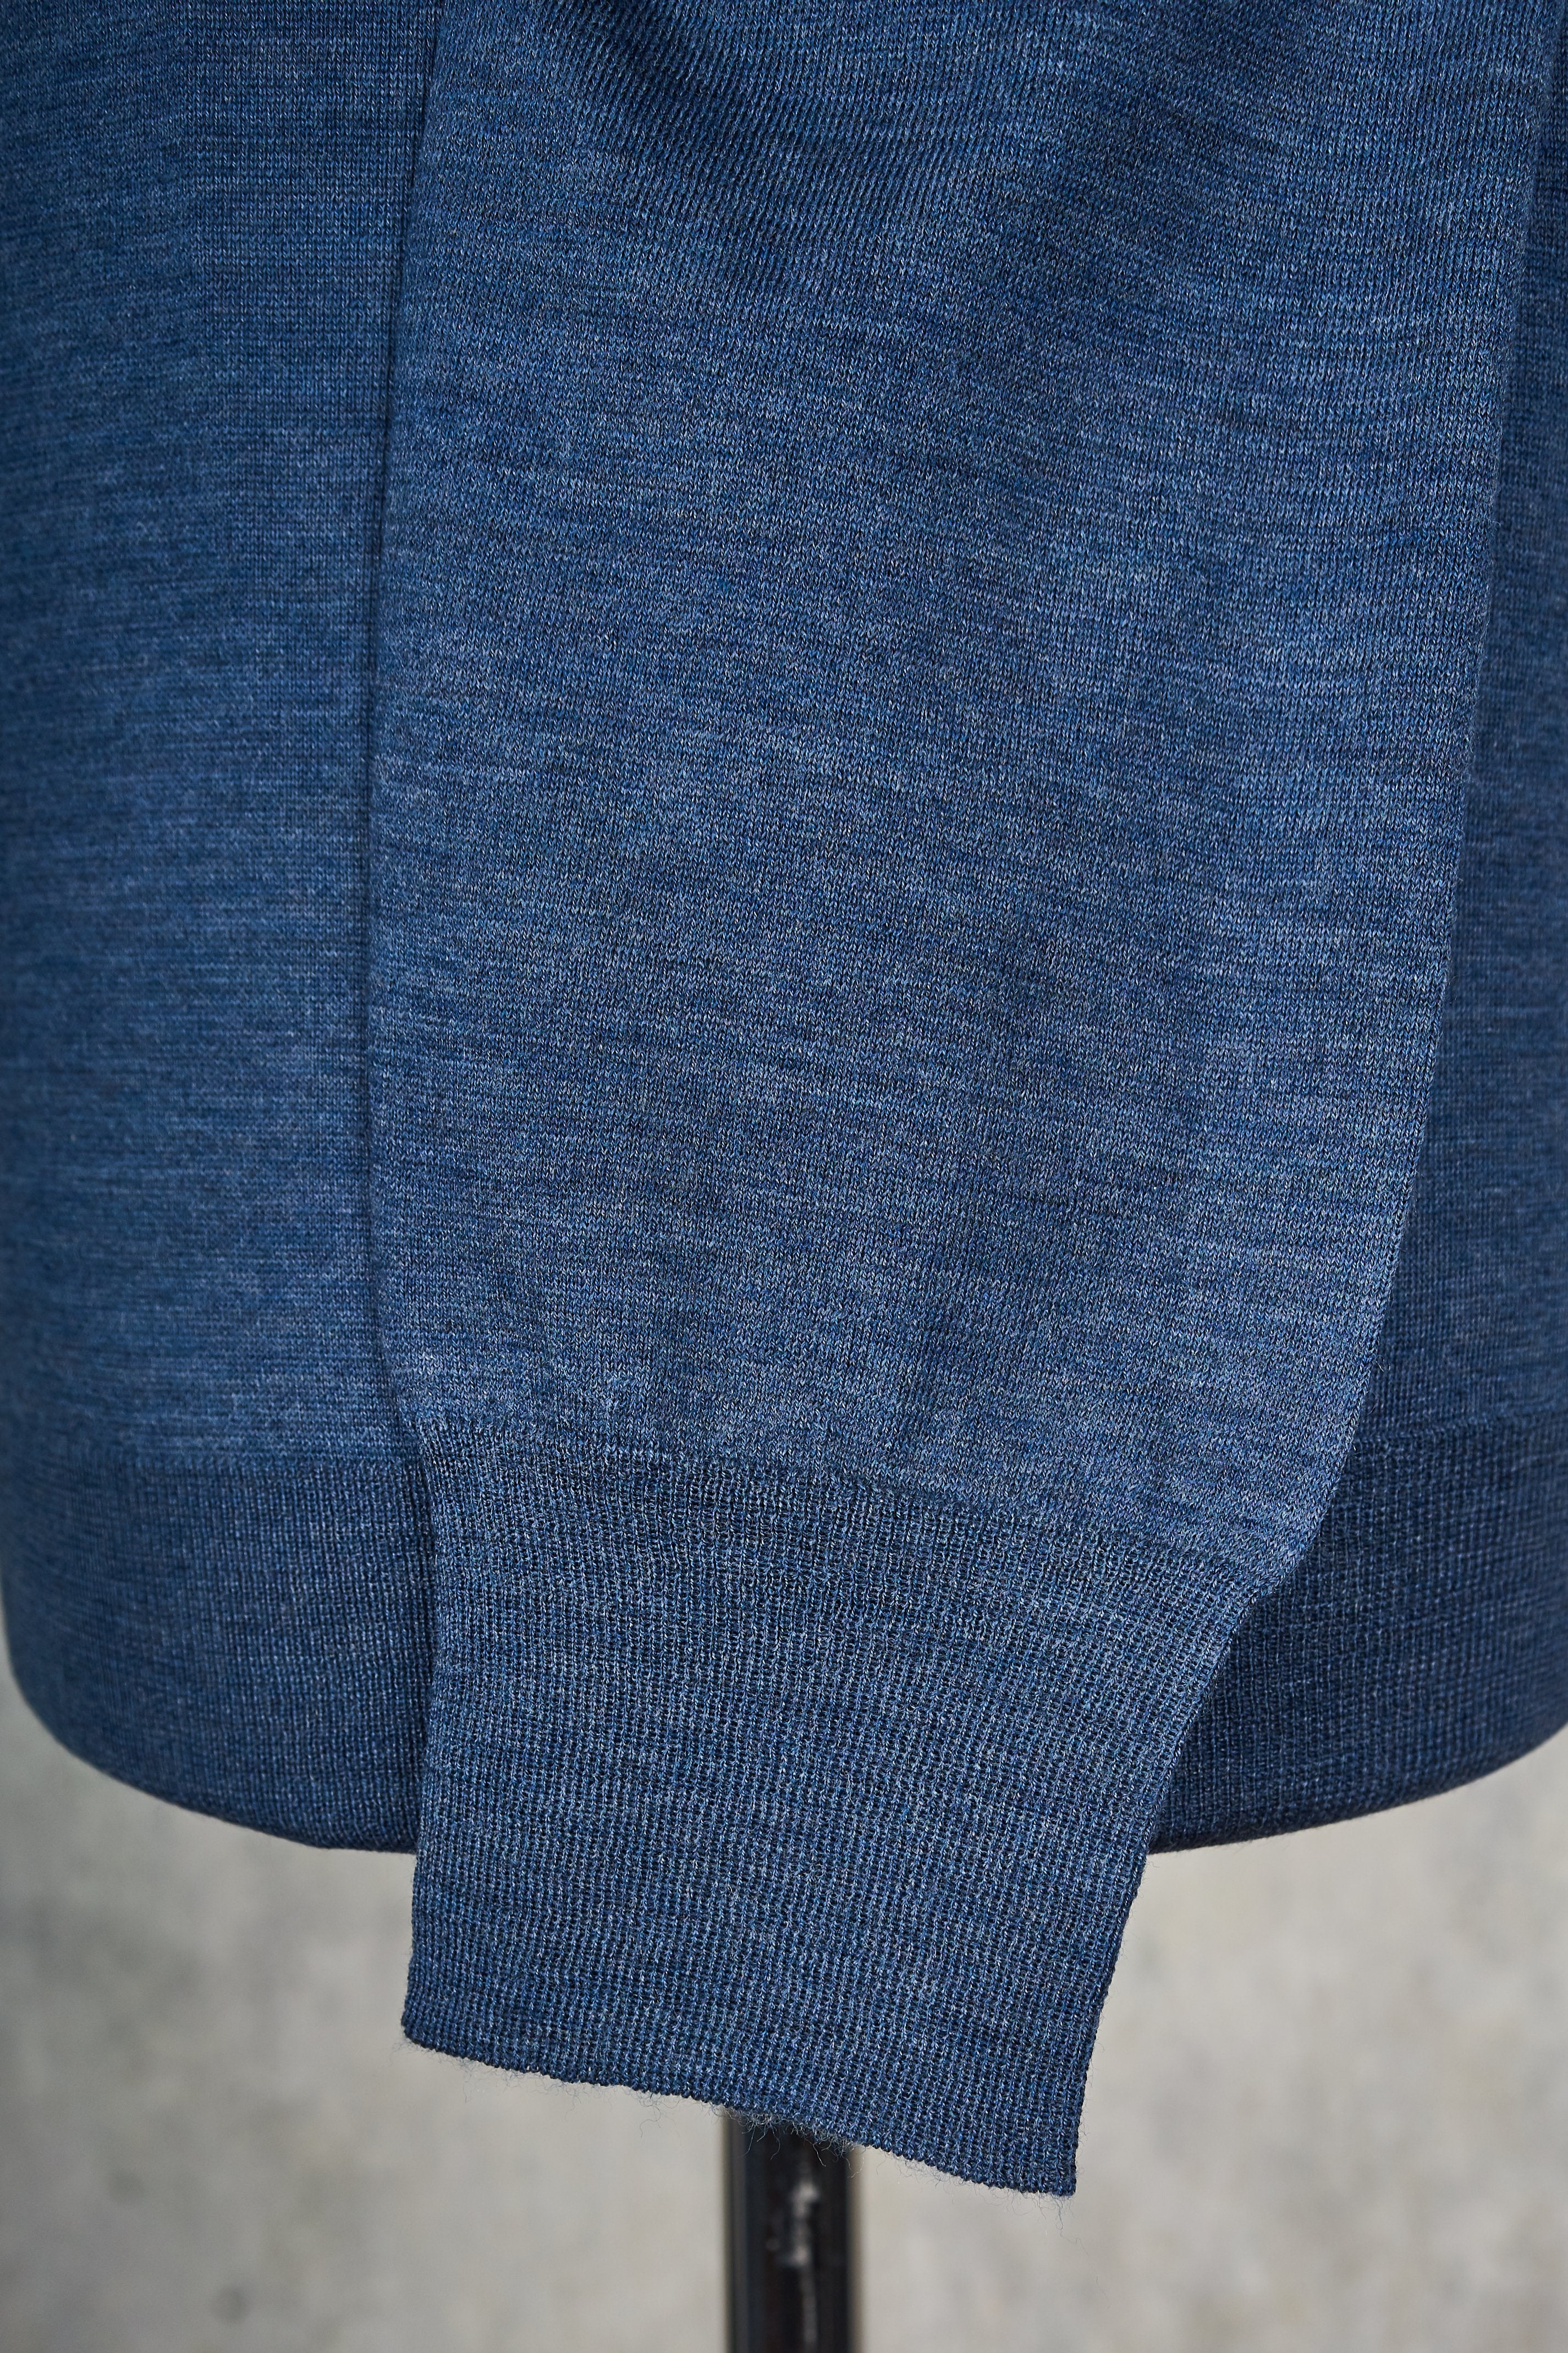 Ascot Chang Blue Extra-Fine Merino Wool Polo